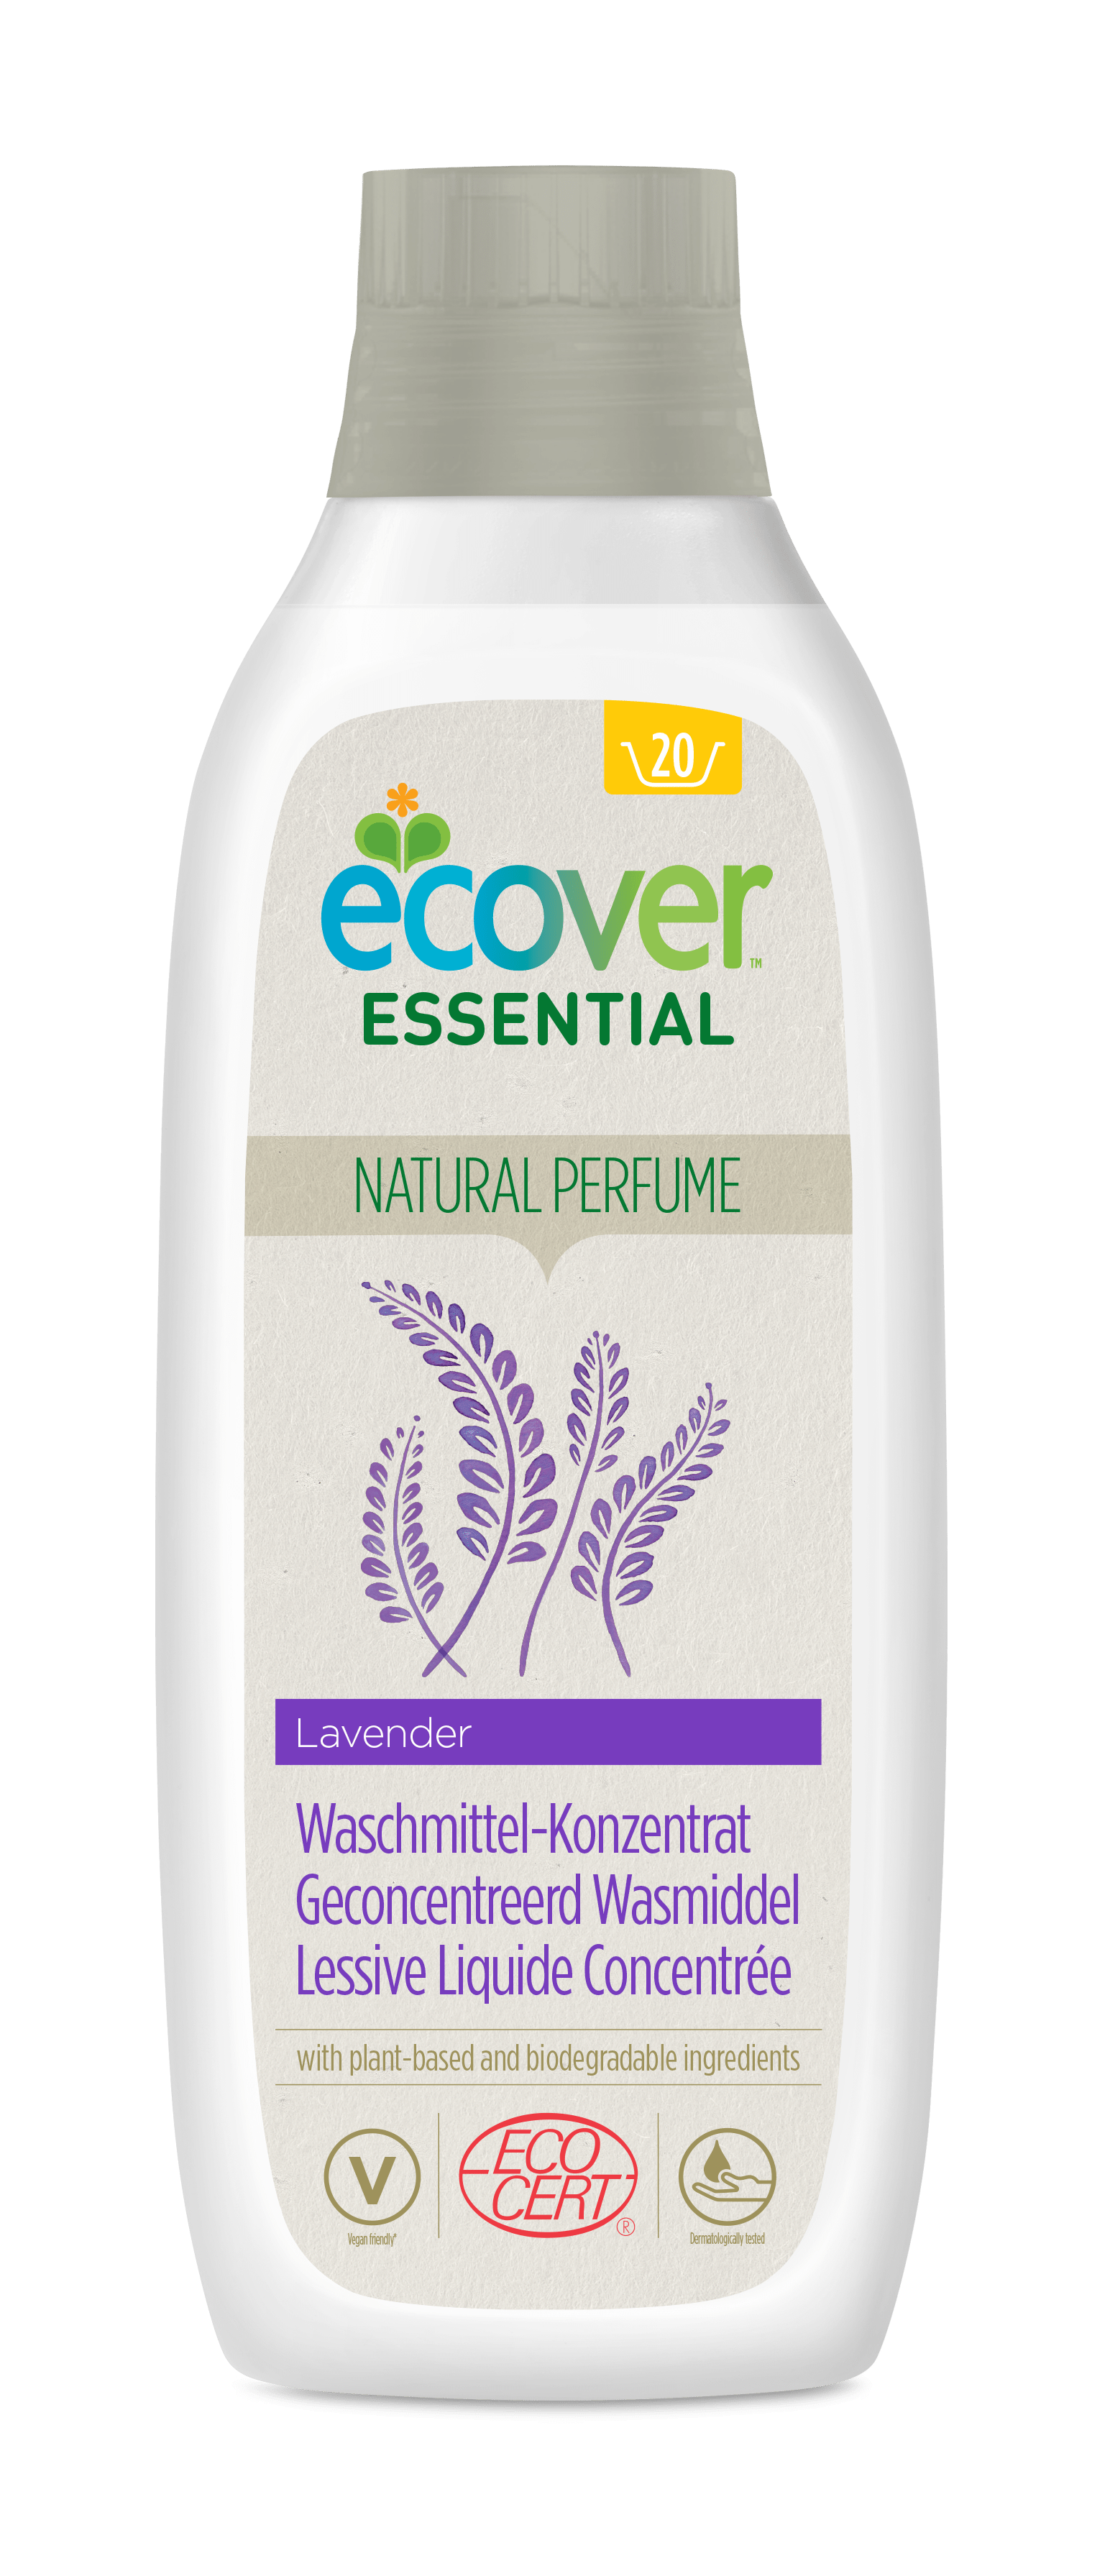 Image of Ecover Essential Waschmittel-Konzentrat Lavendel (1L)